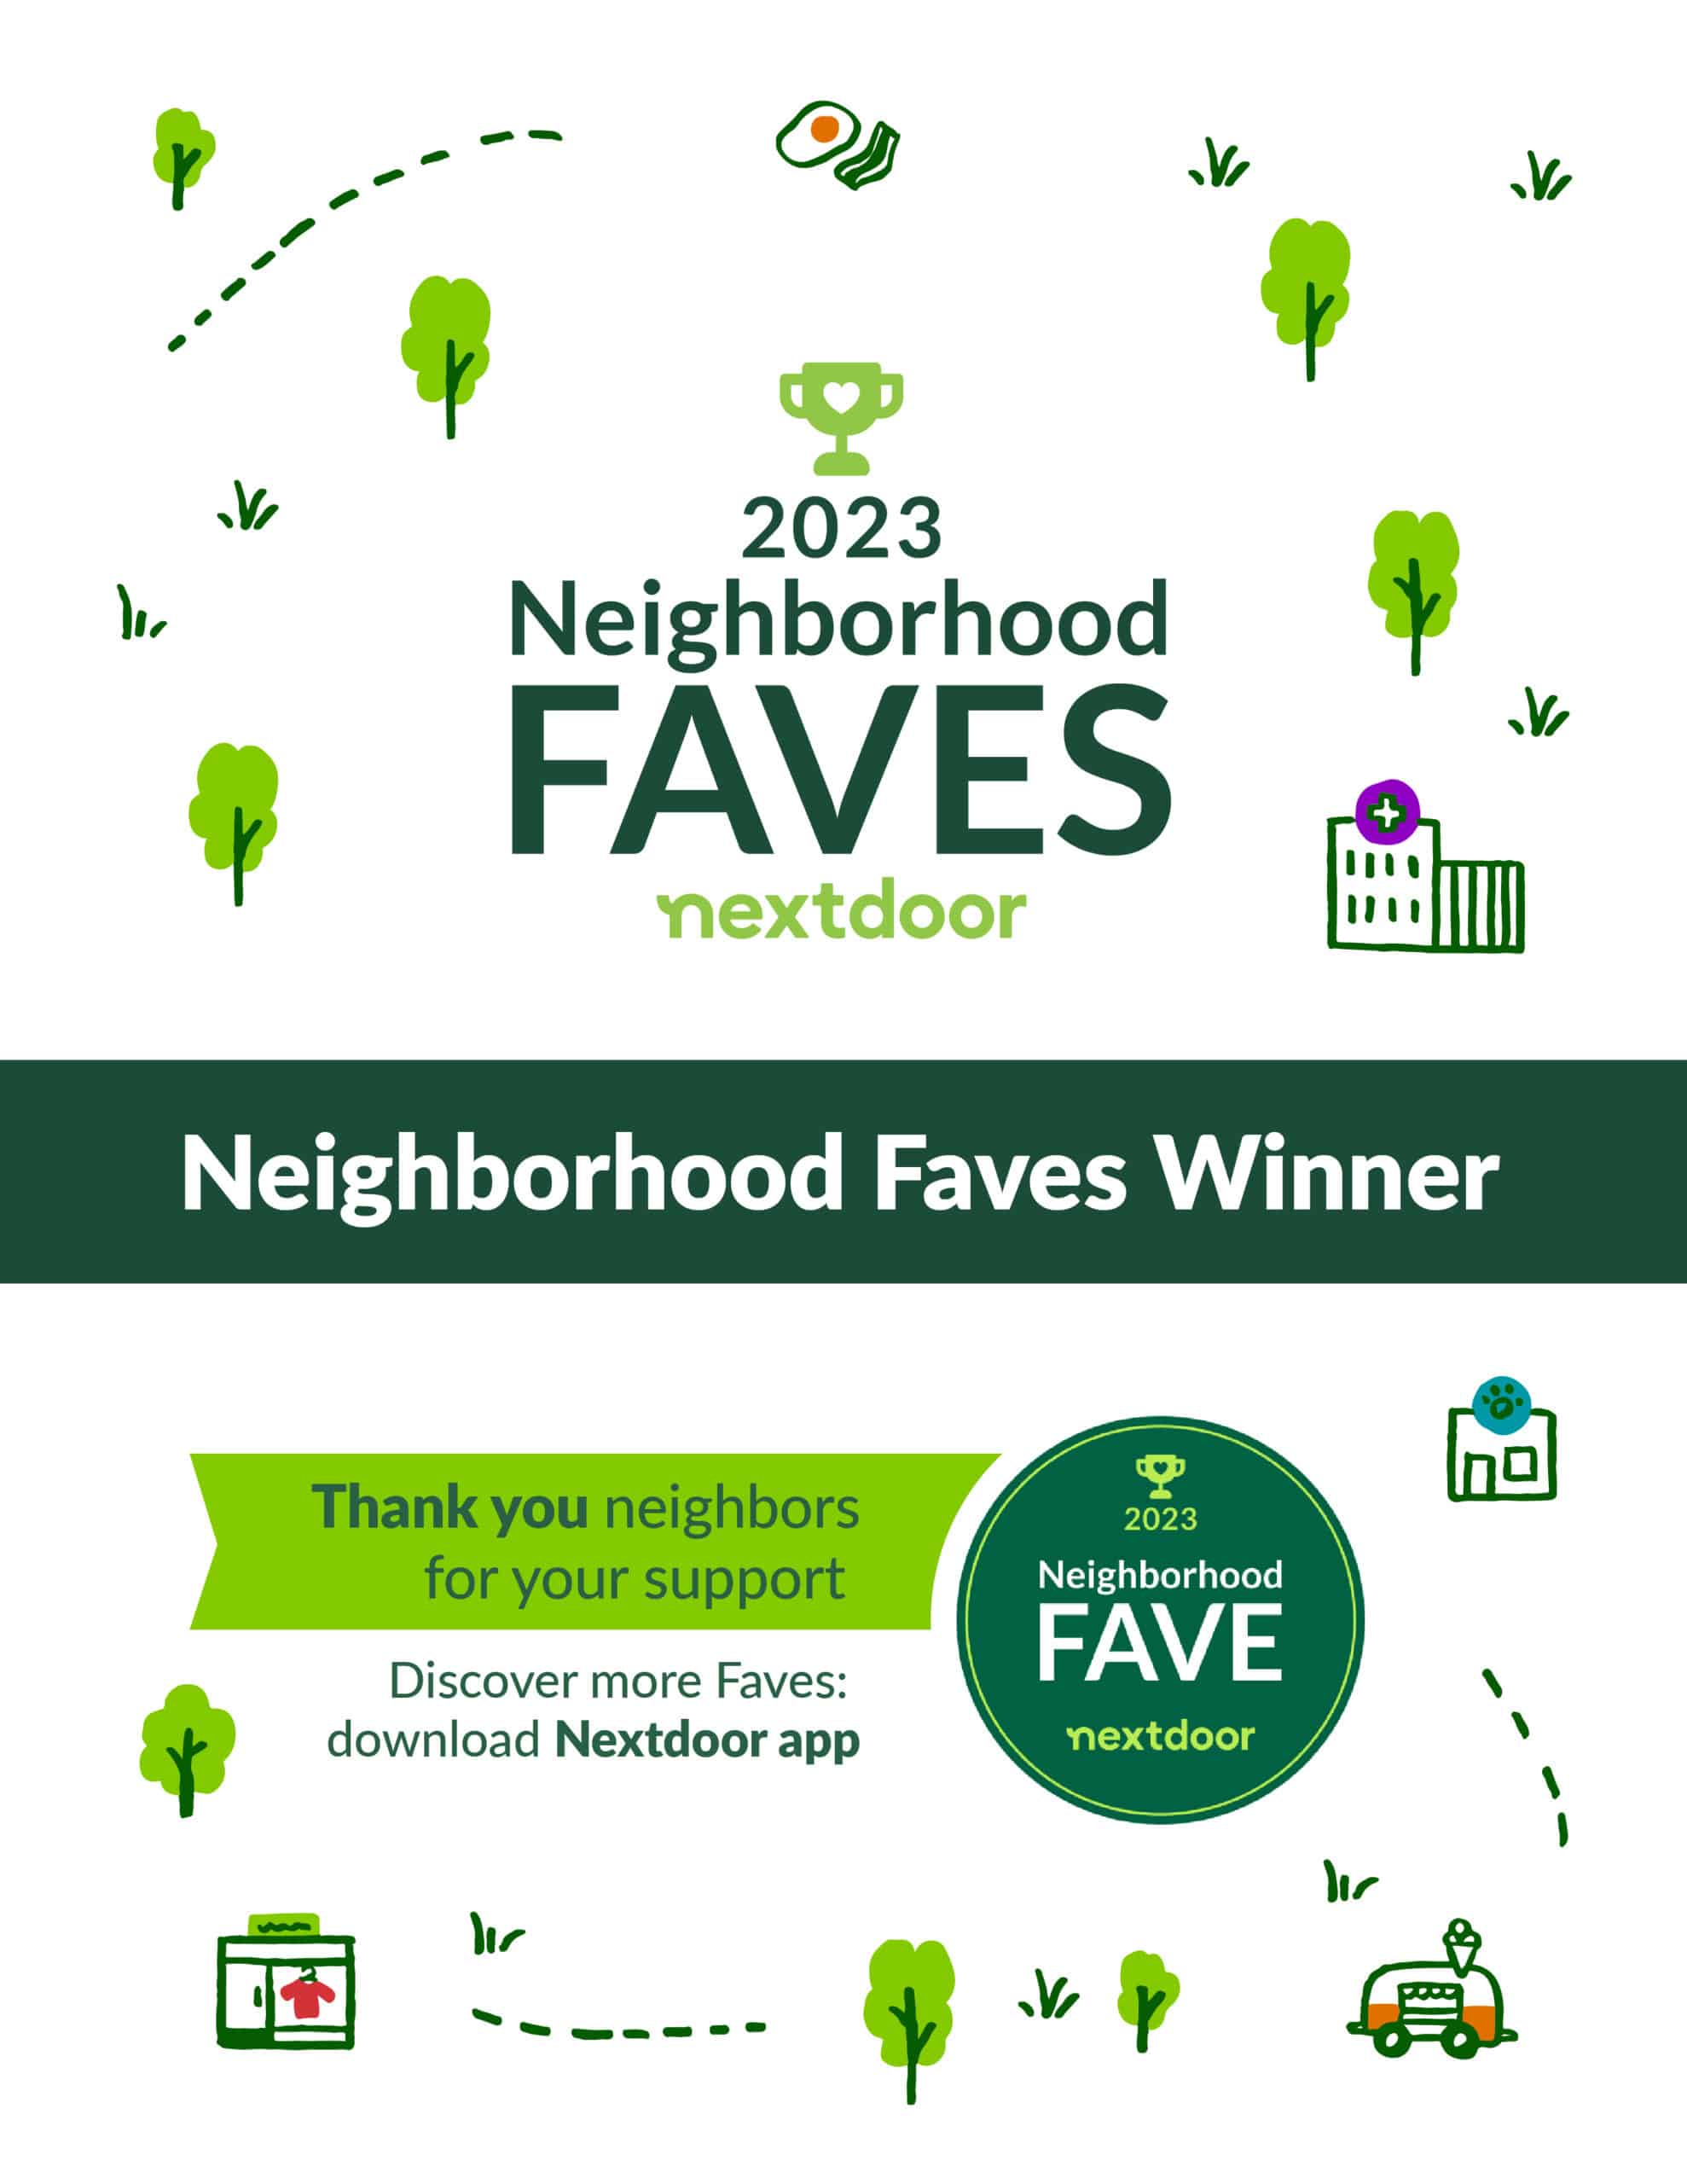 Gigawatts Electric Neighborhood Fave Winner in Nextdoor’s 2023 Local Business Awards